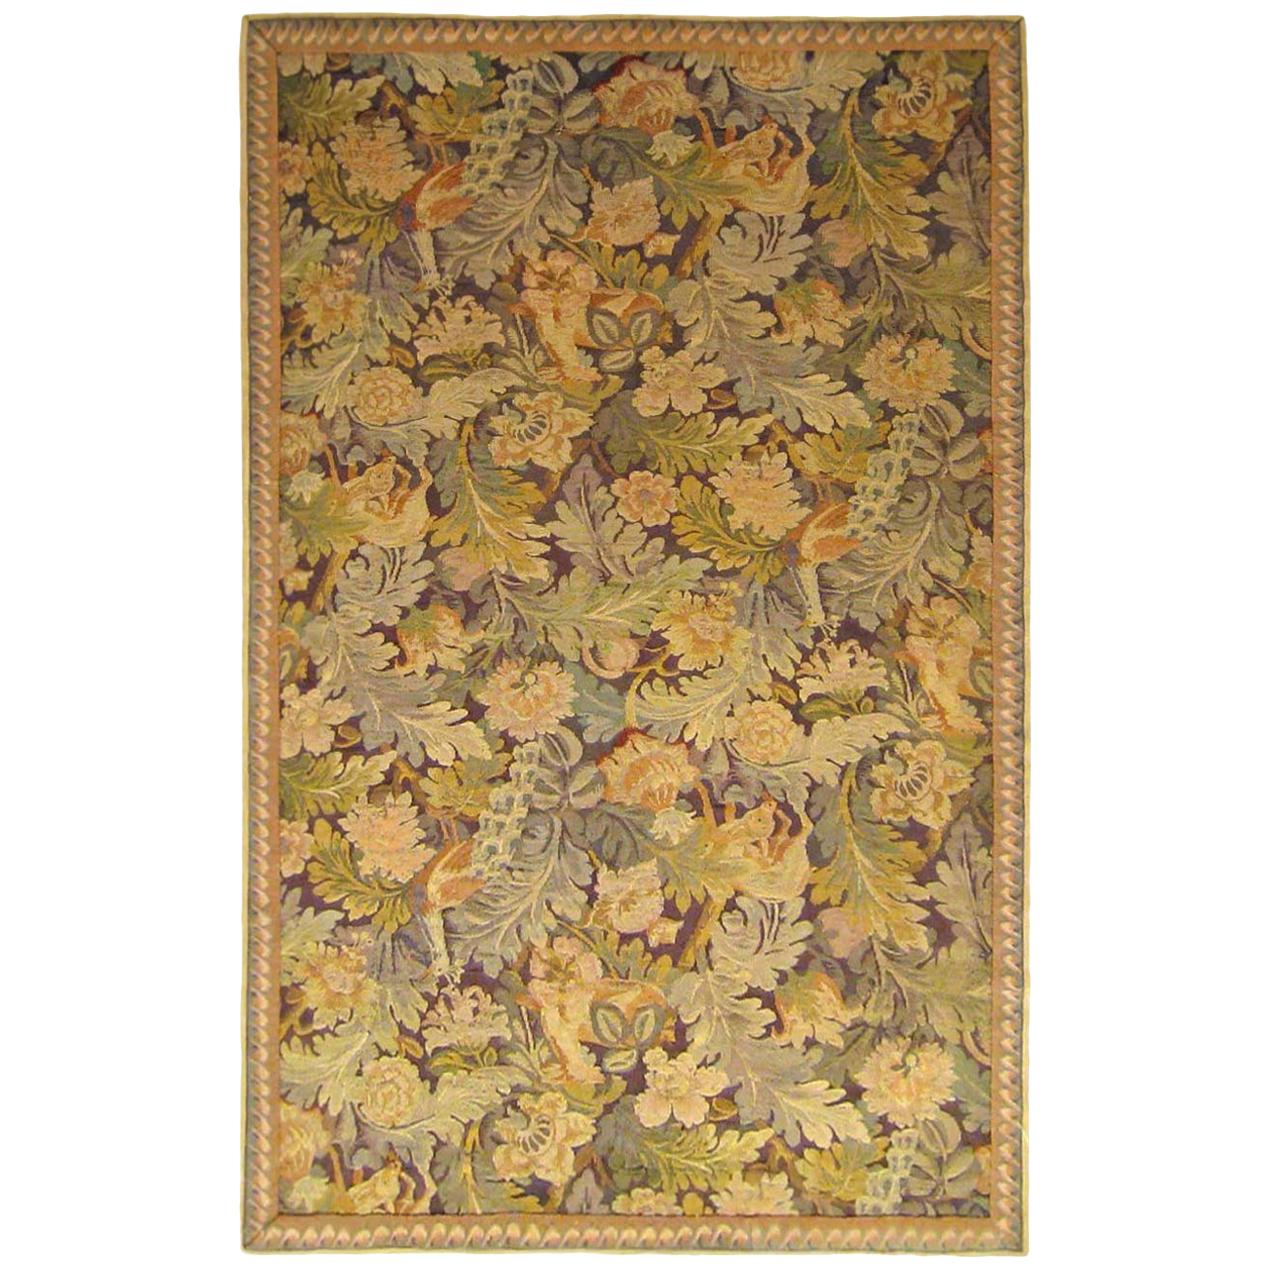 Late 19th Century English William Morris Large Leaf Verdure Tapestry